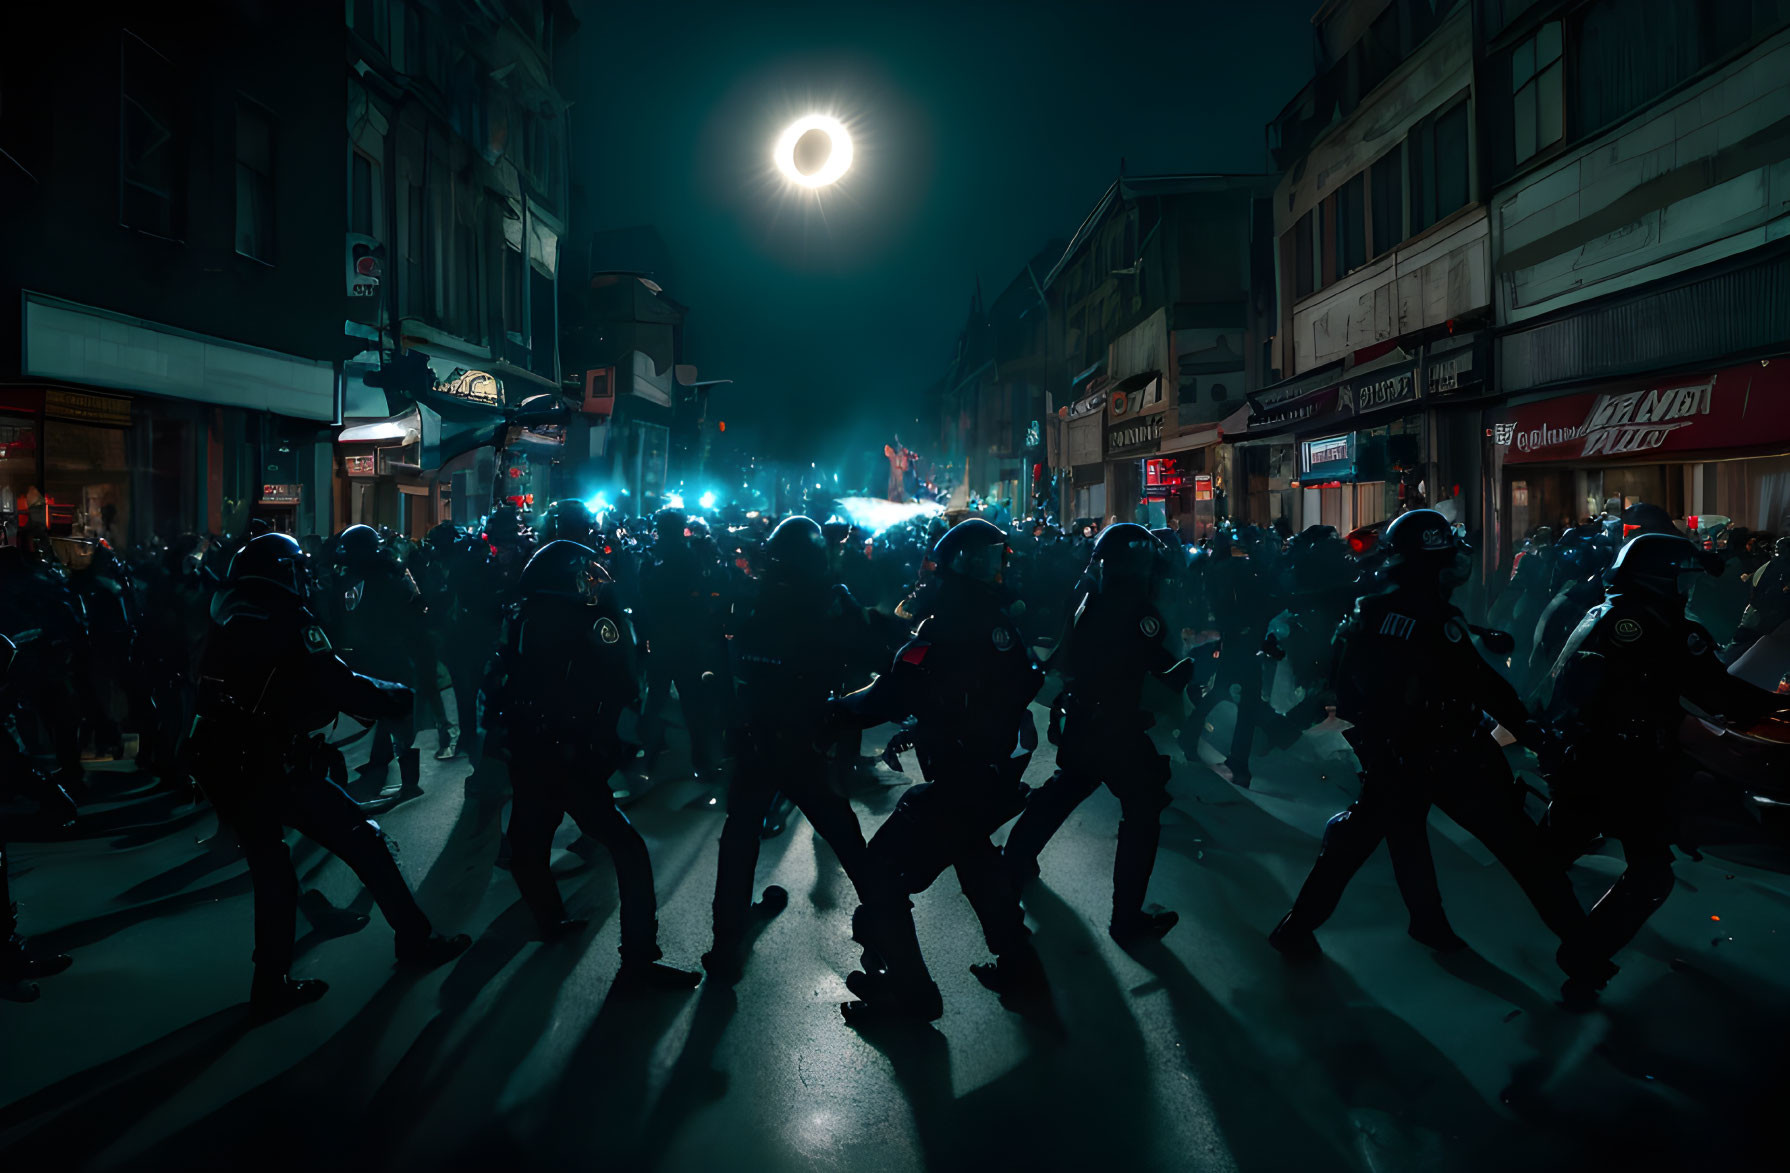 Riot police in gear under full moon on urban street